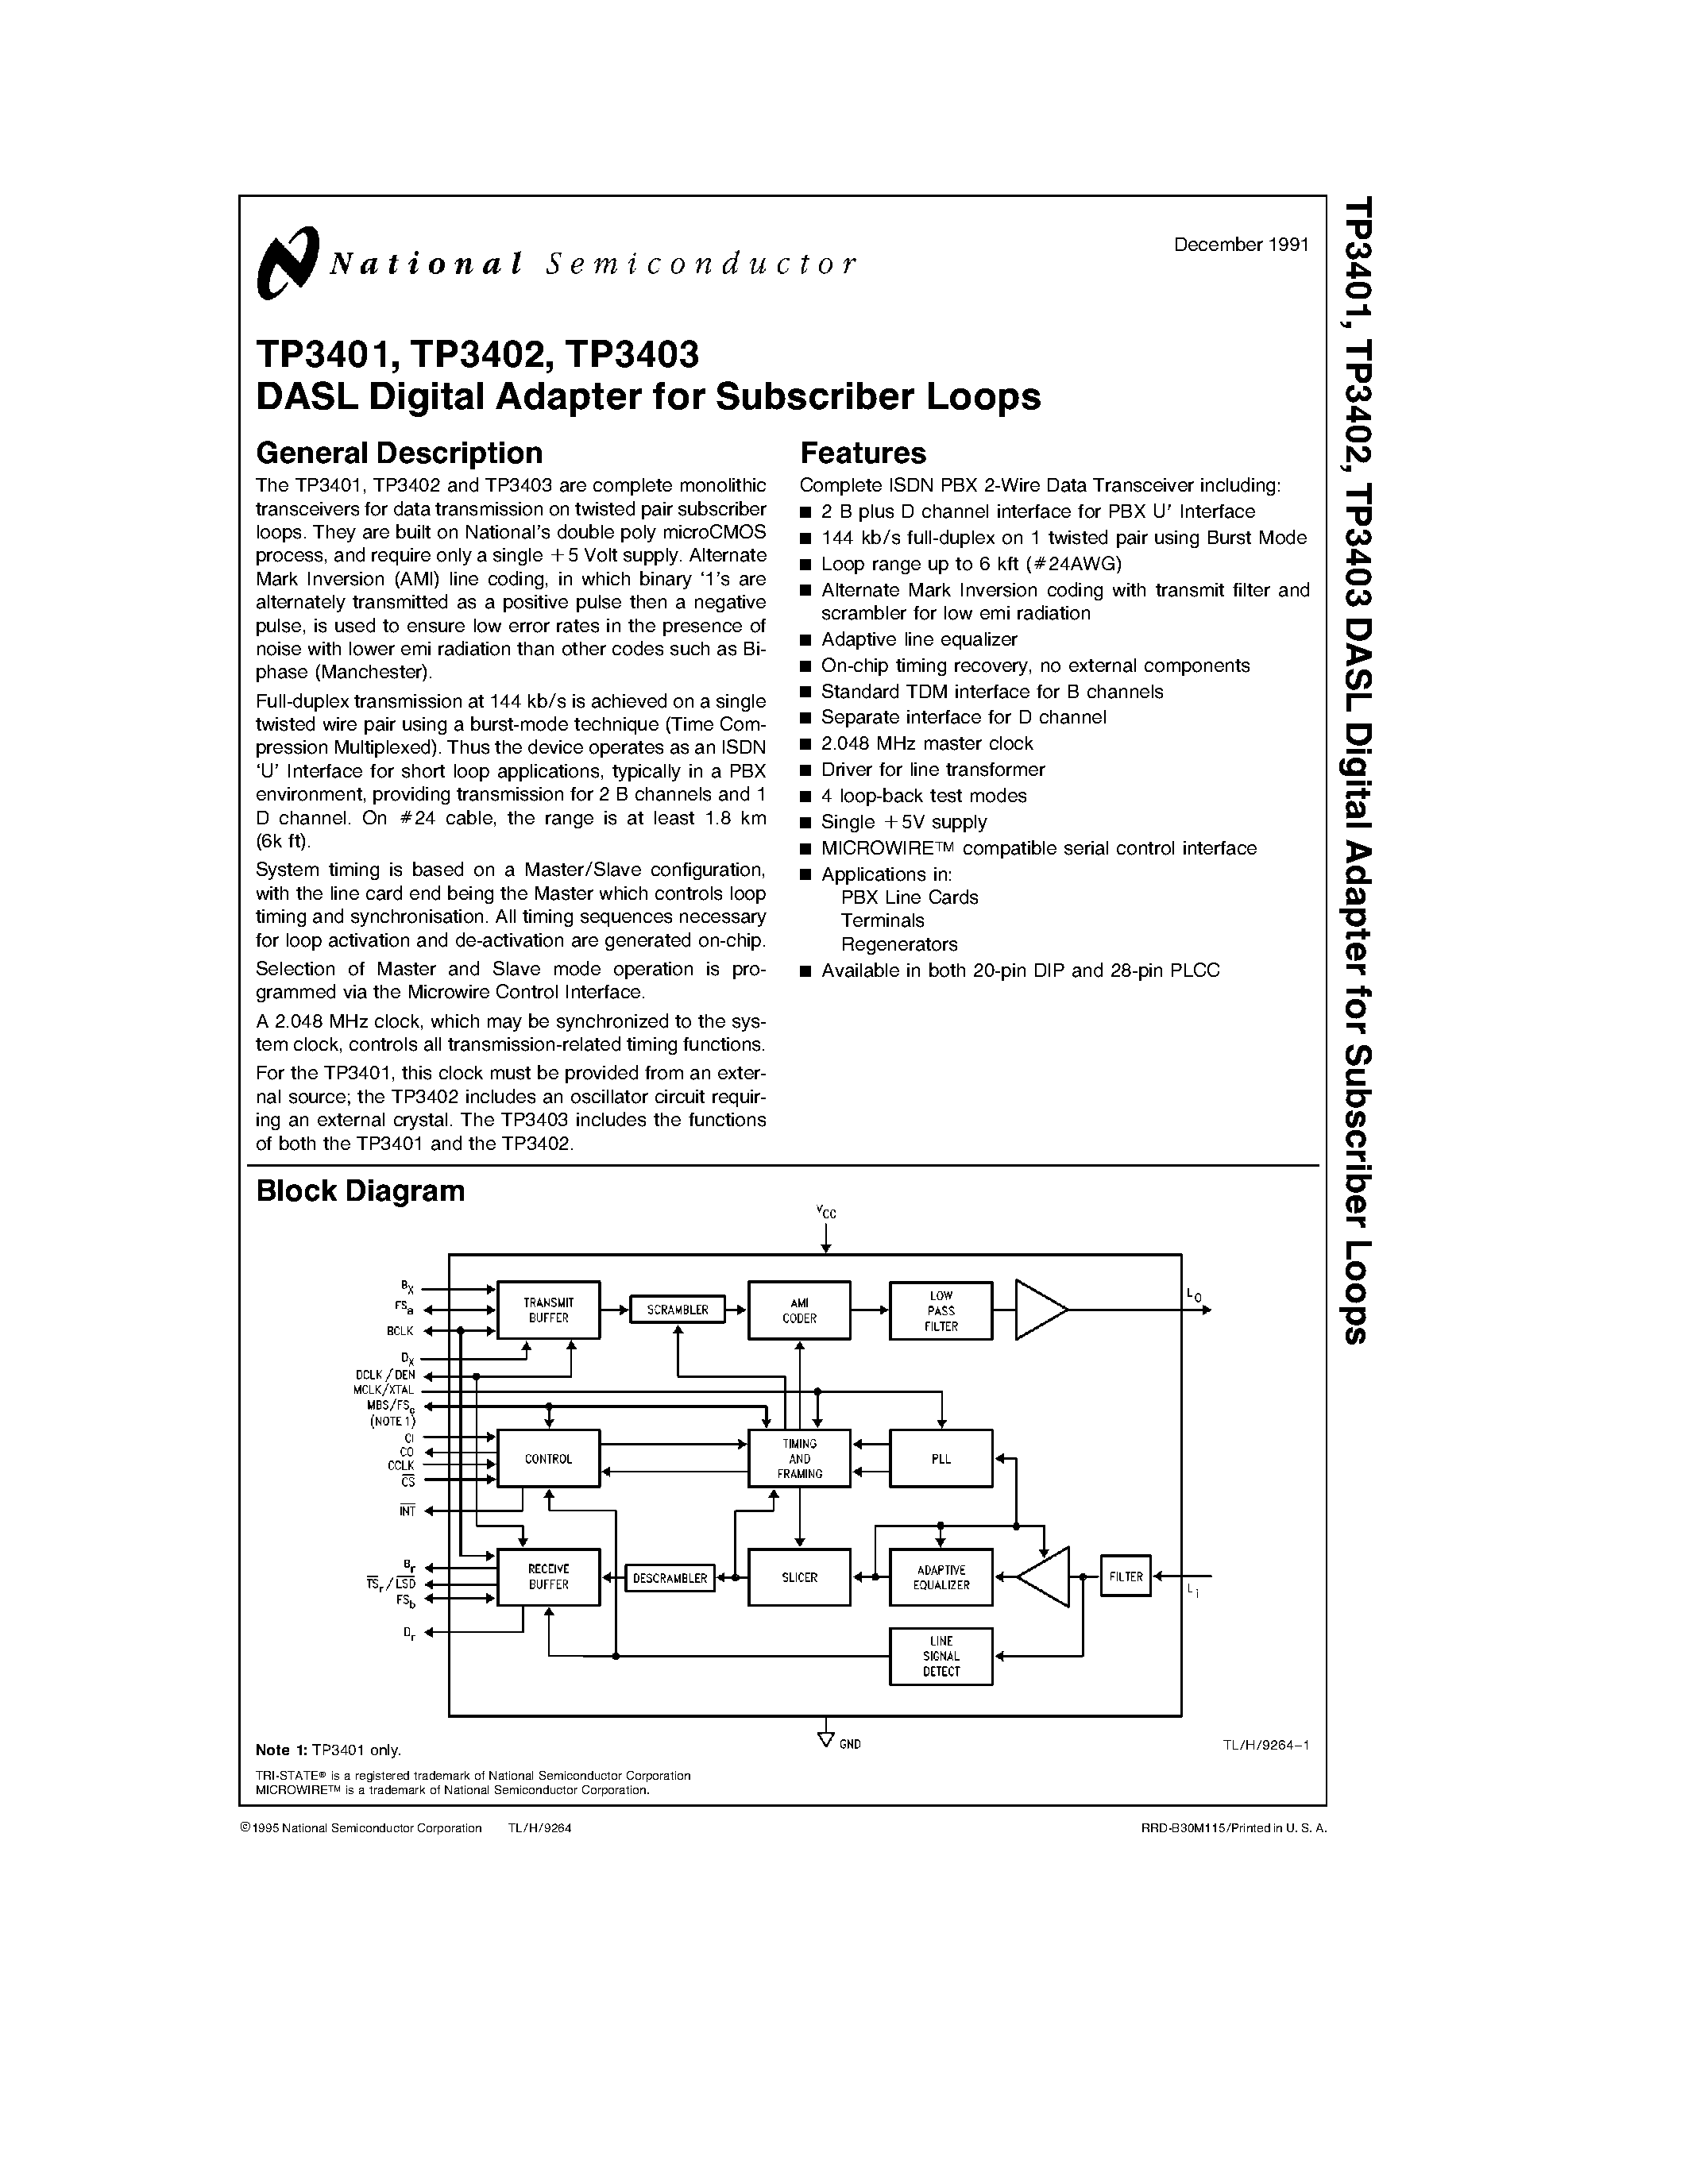 Даташит TP3402 - DASL Digital Adapter for Subscriber Loops страница 1